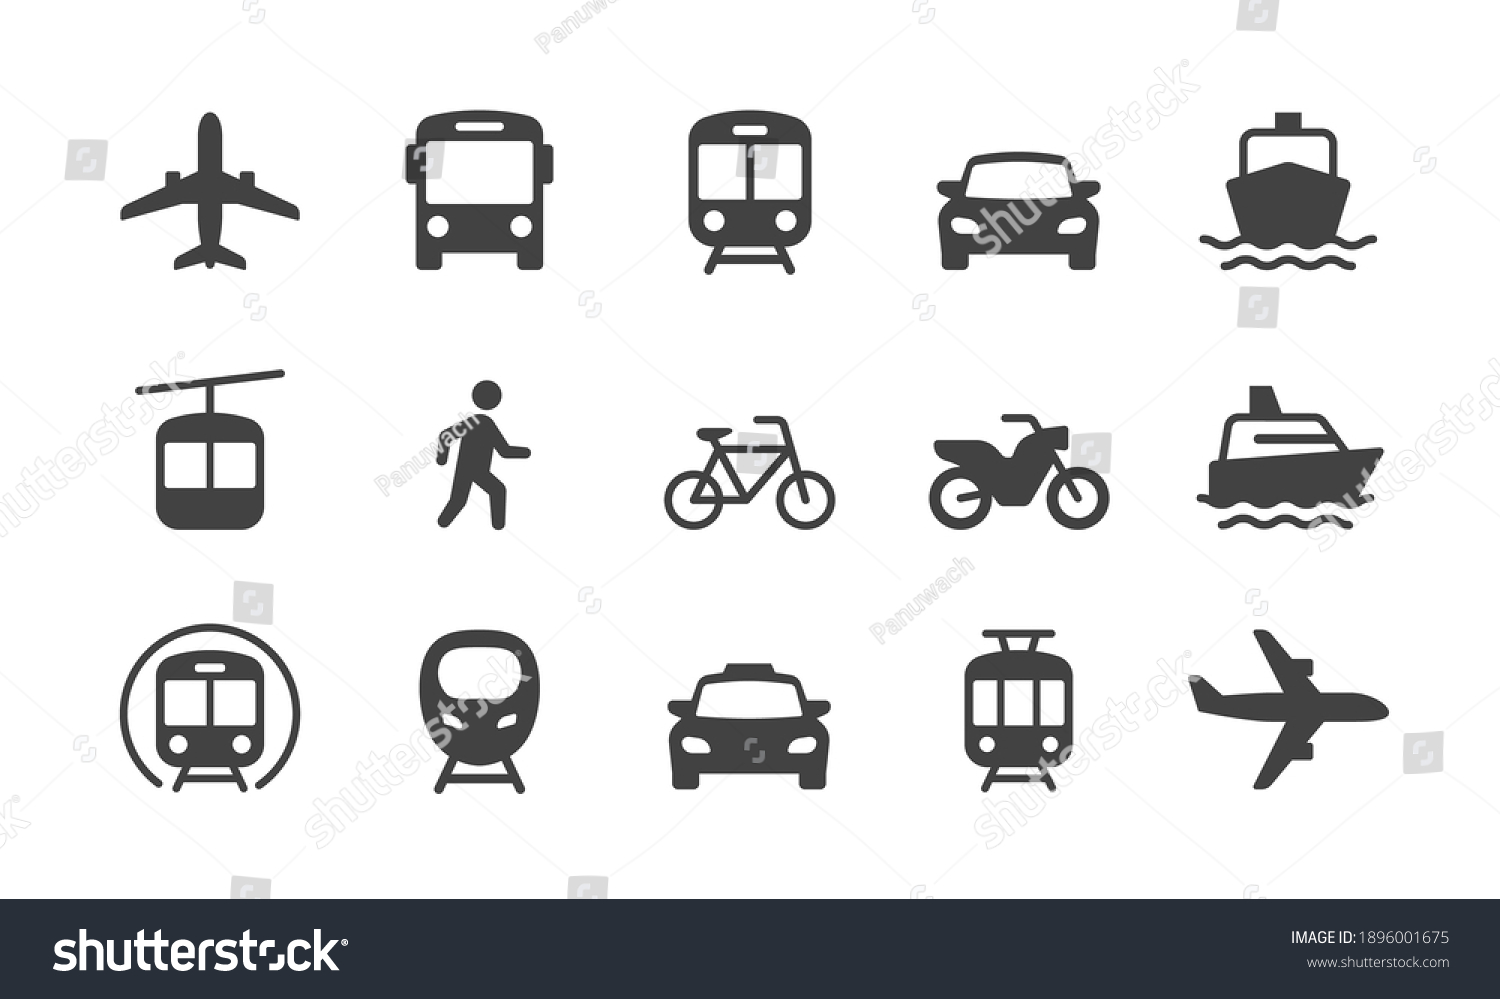  Set of Public Transportation related icons. Minimal flat graphic transport symbol. #1896001675